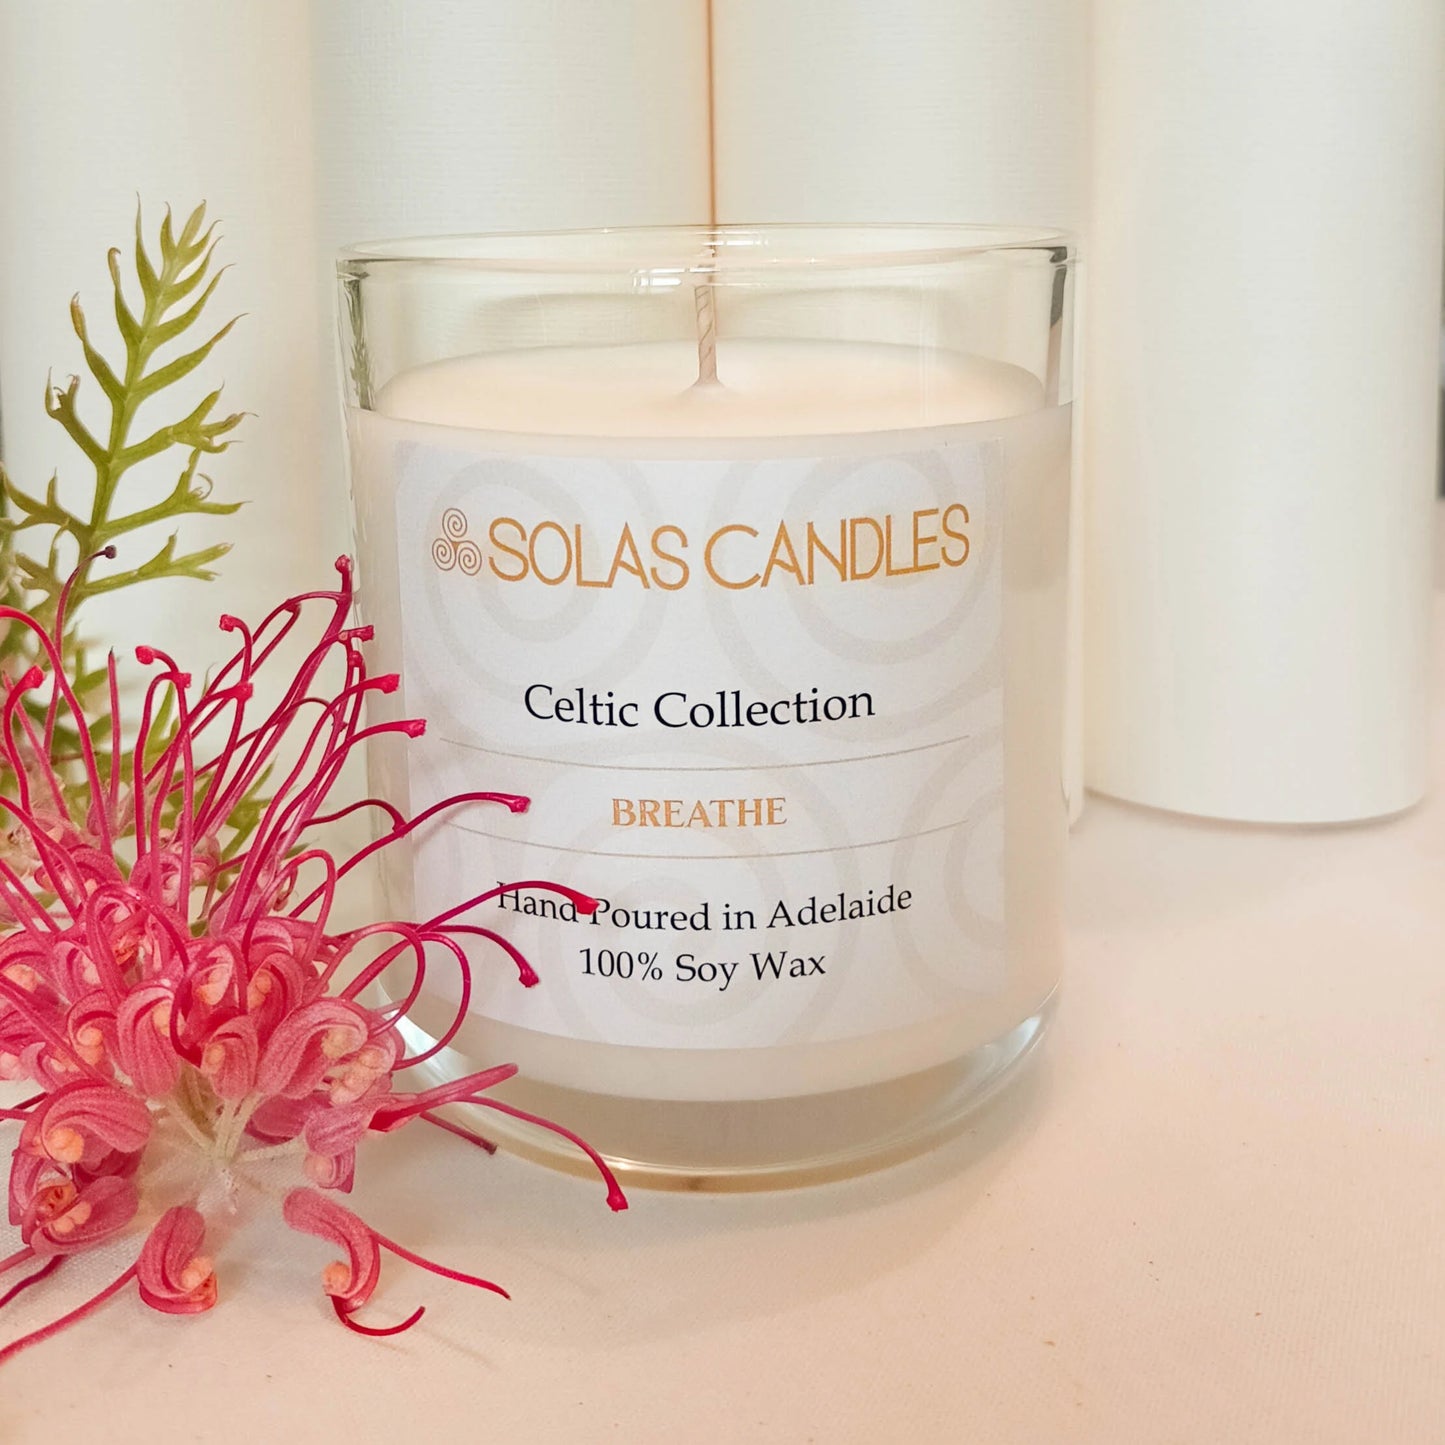 Solas Candles - Celtic Collection, Breathe